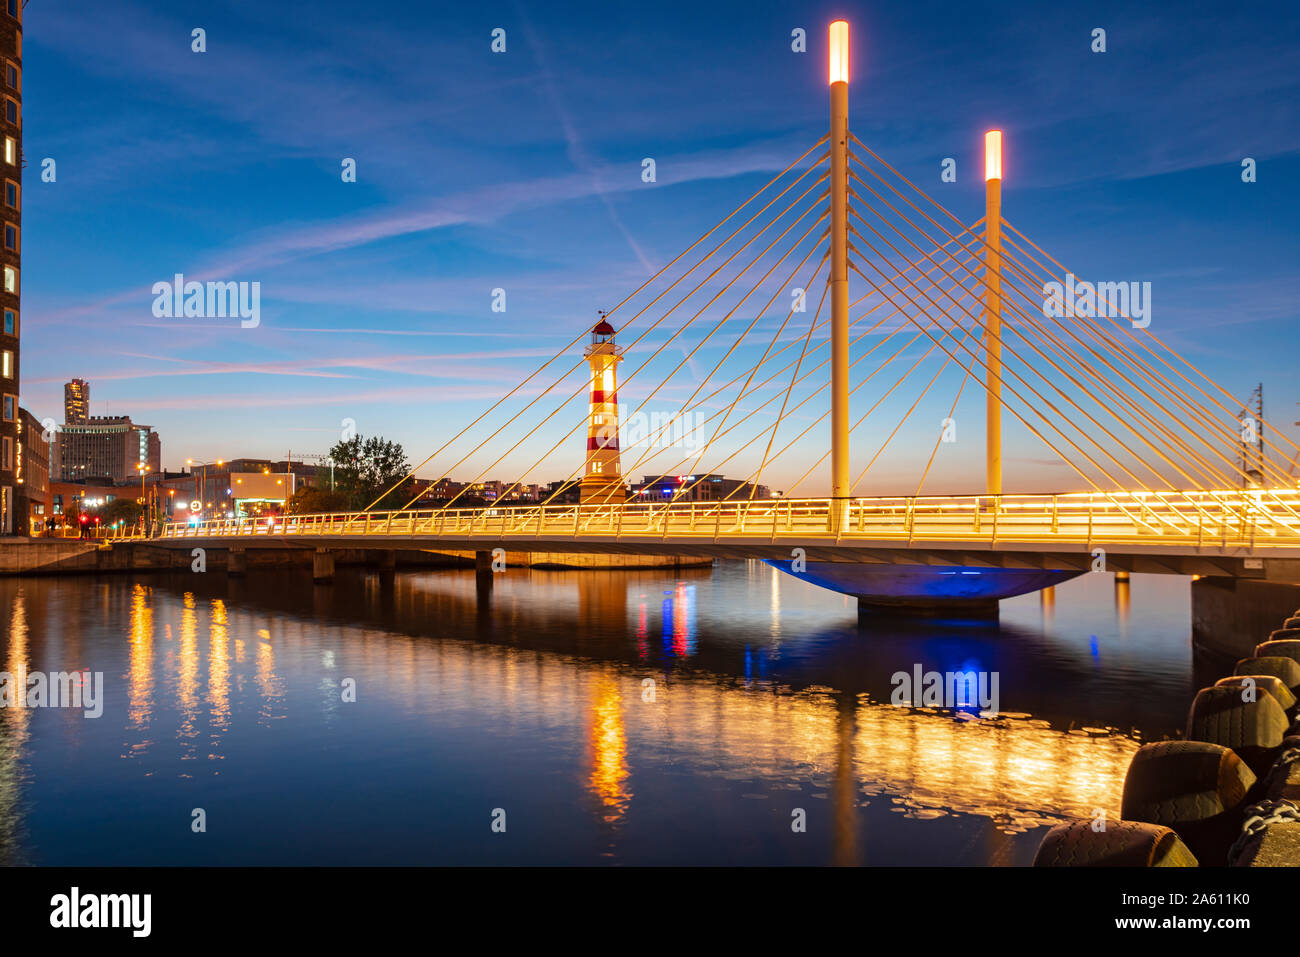 Illuminated bridge over river against sky at Malmo, Sweden Stock Photo